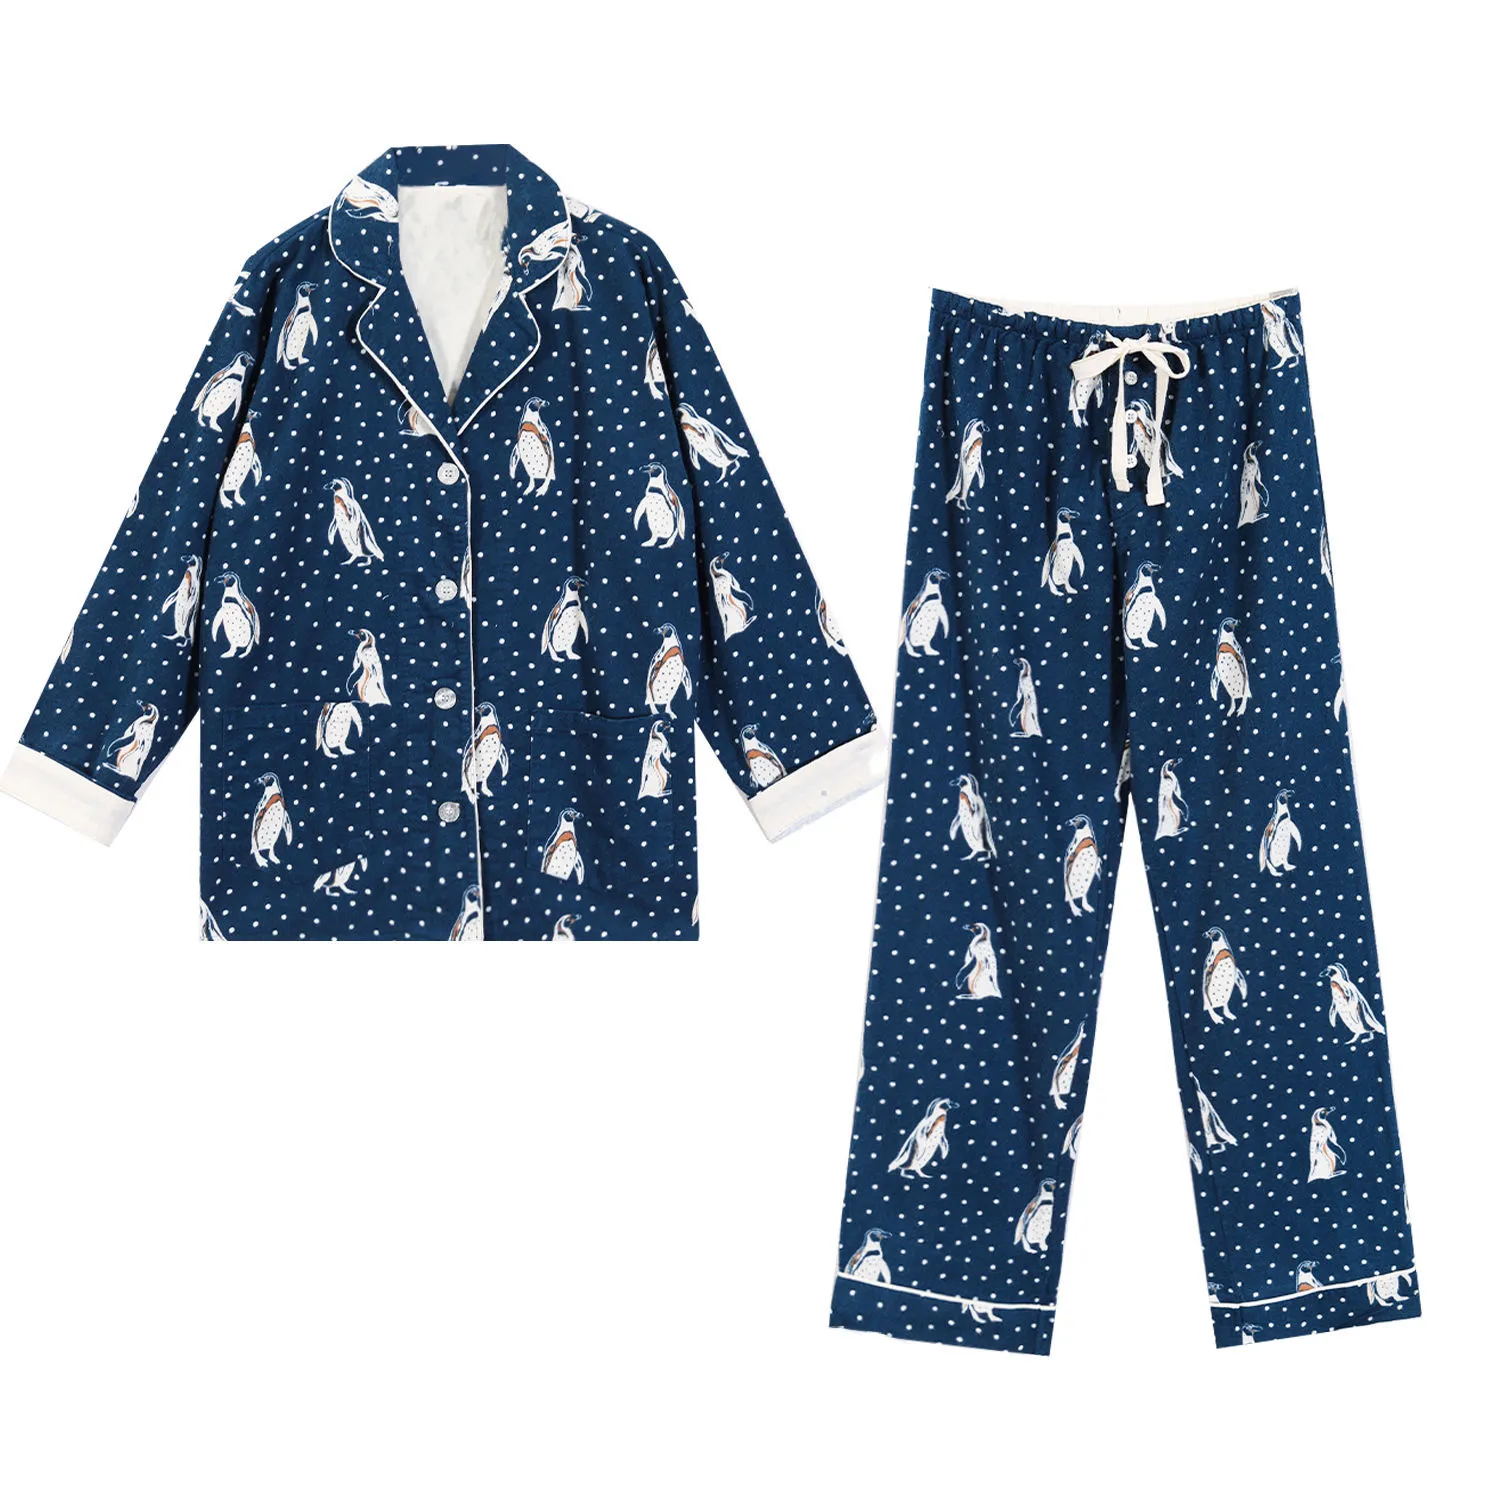 Light Weight Two Pieces Women Pajamas Pyjamas With Long Sleeves Casual Women's Homewear